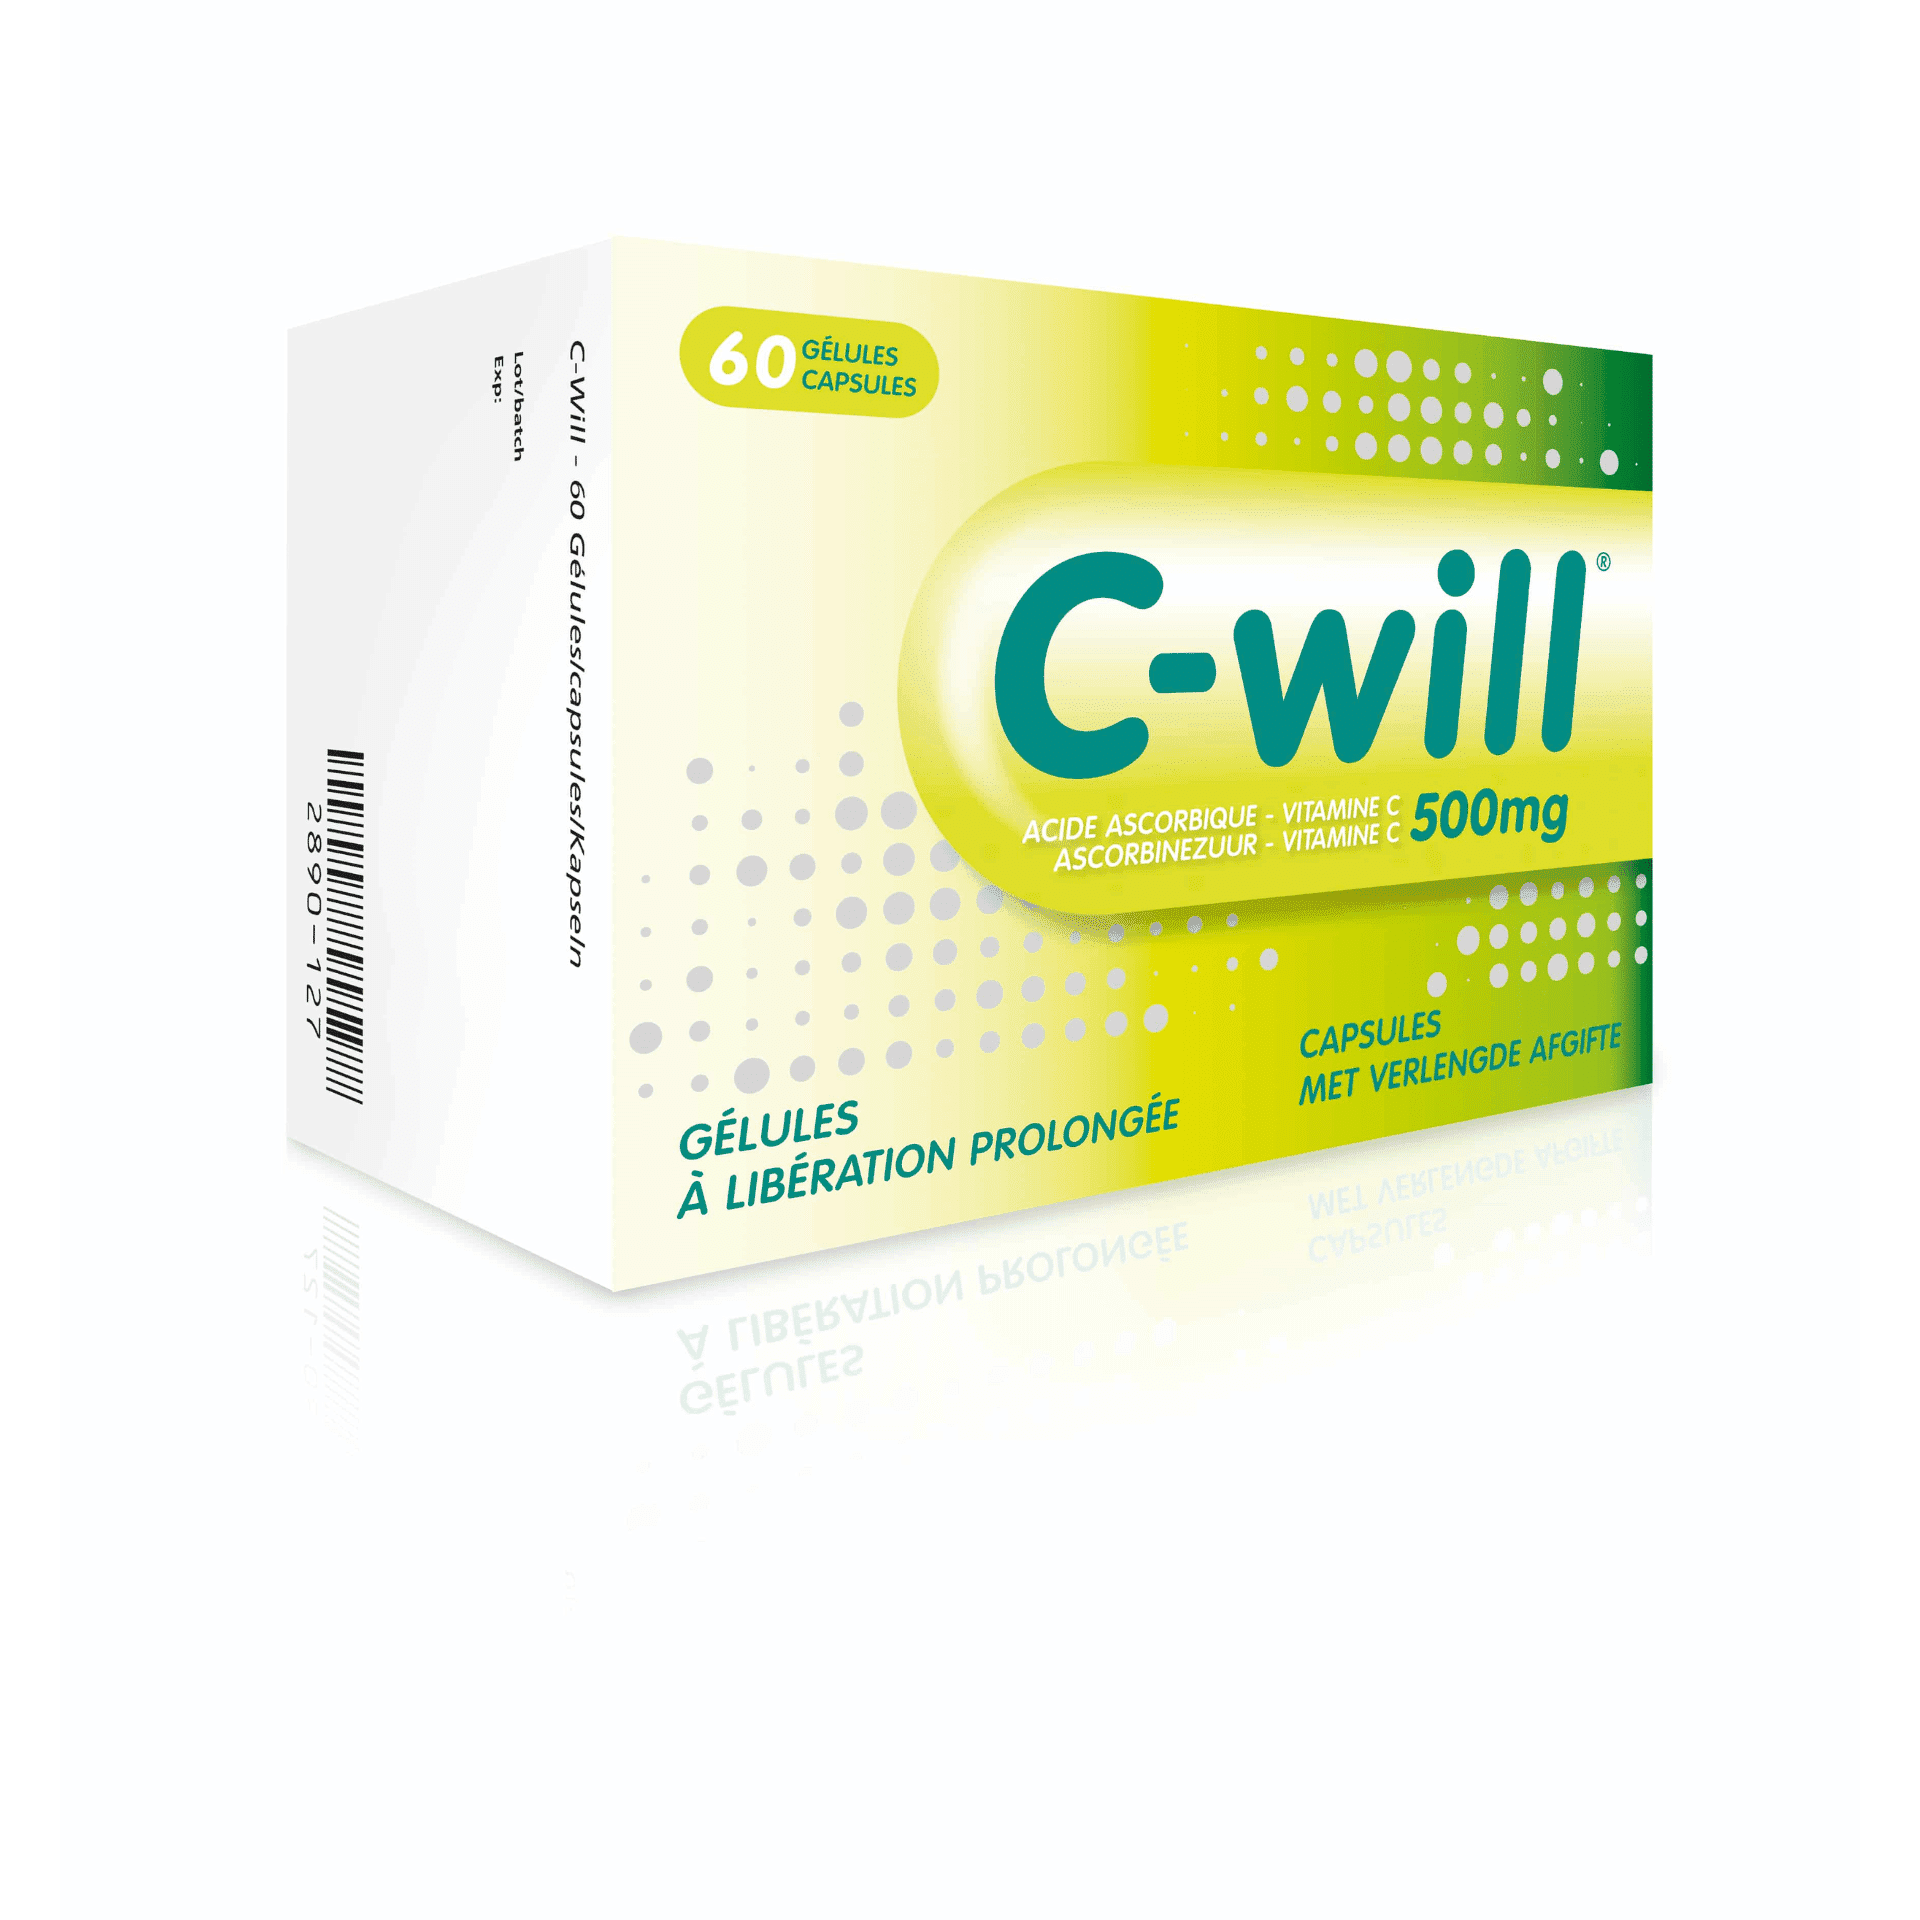 C-Will 60 gélules